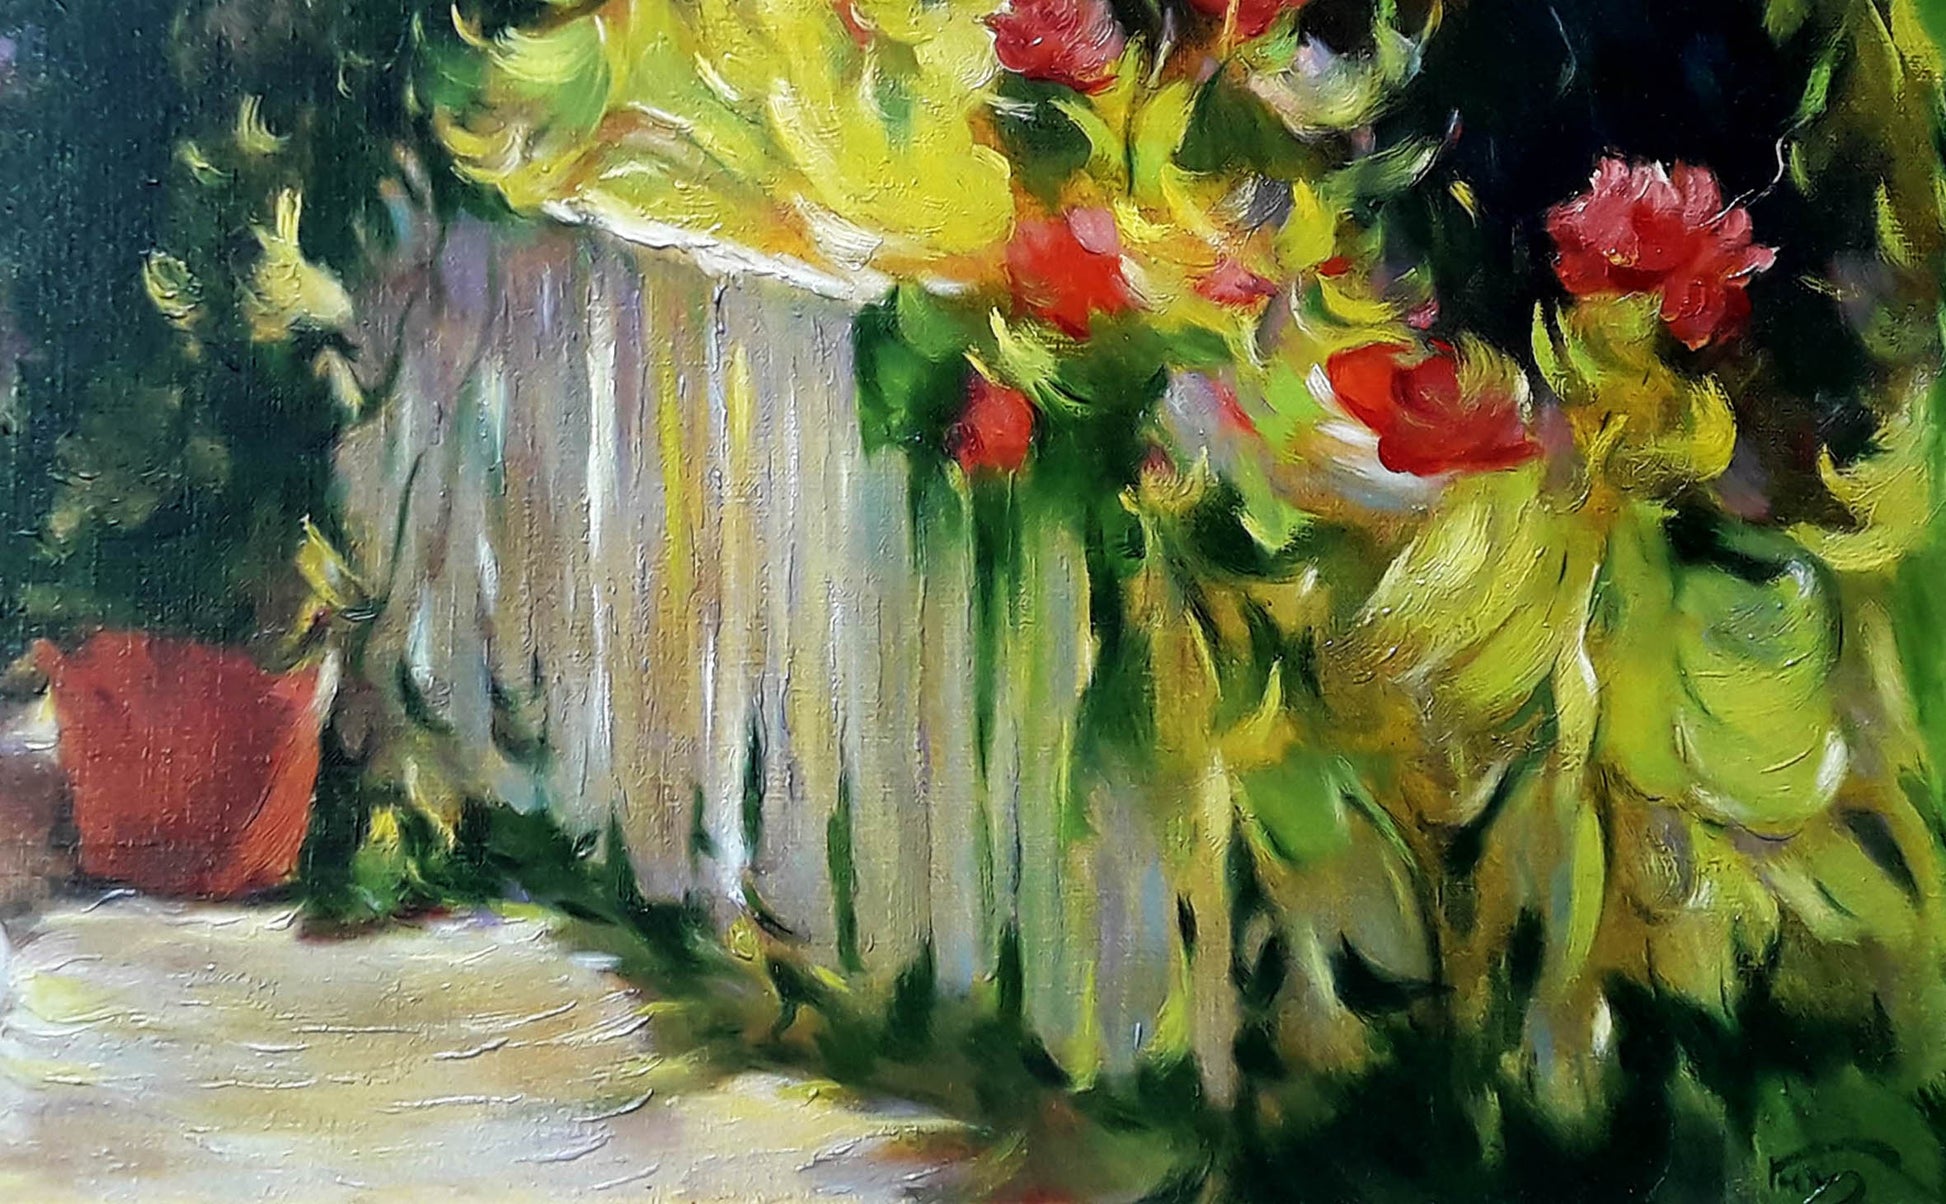 Summer in the Garden captured in an oil painting by Vasily Korkishko